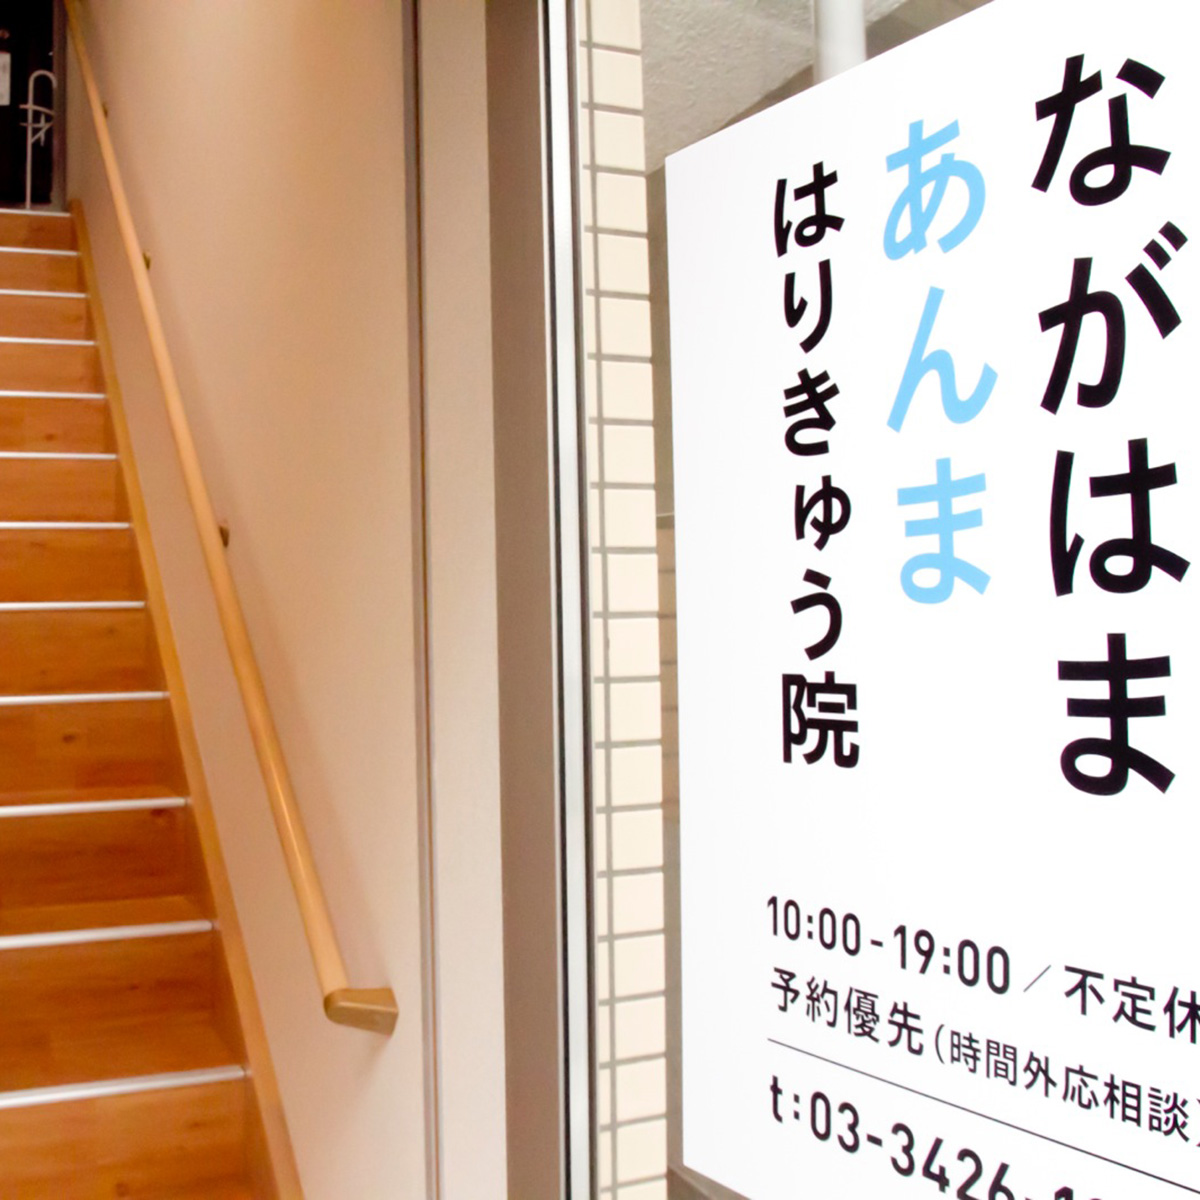 Nagahama Acupuncture Clinic